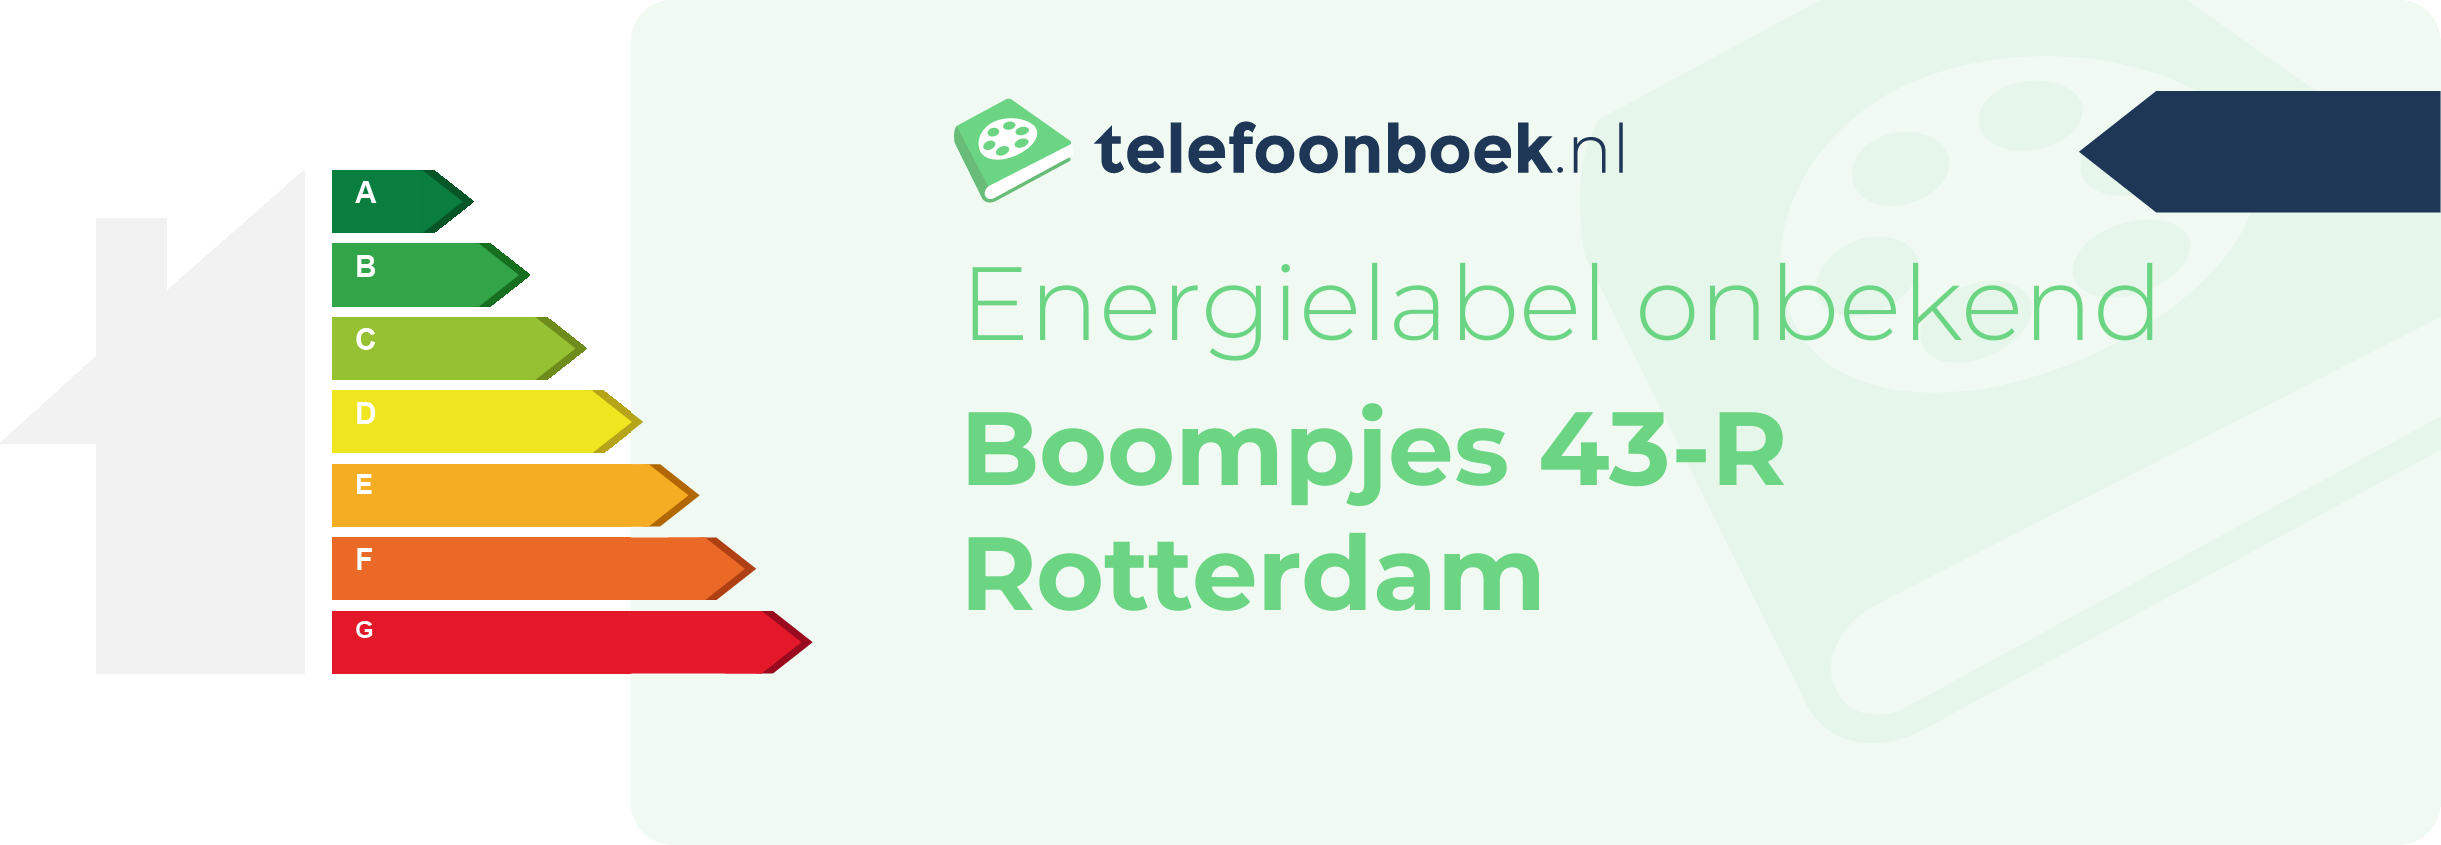 Energielabel Boompjes 43-R Rotterdam